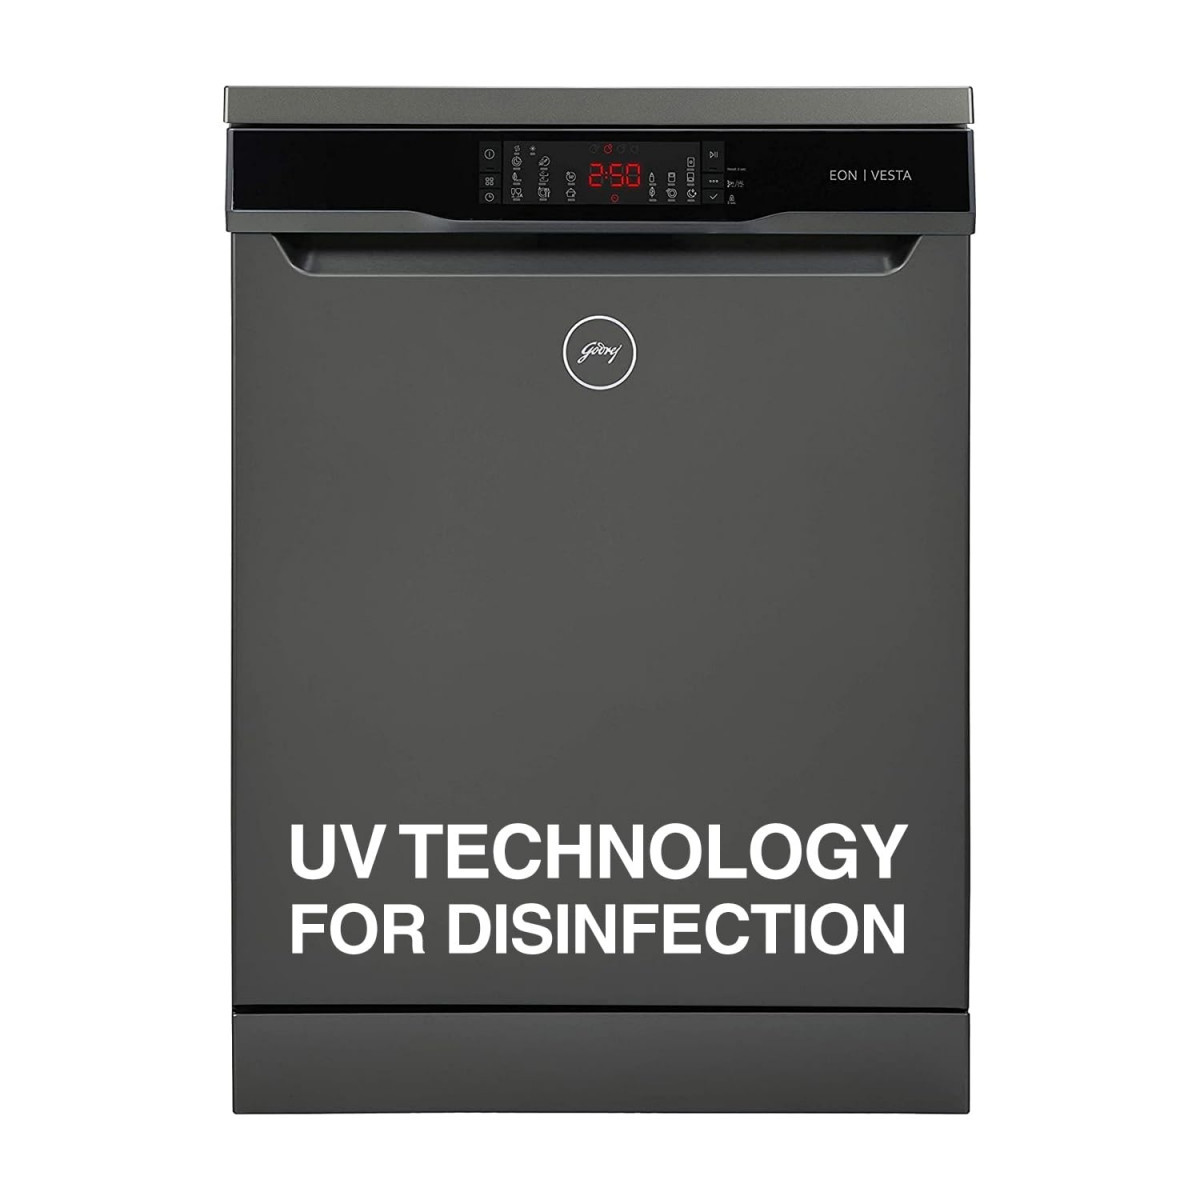 Godrej Eon Dishwasher 12 place setting  Anti-Germ CrystaLight powered by UV Technology  Extra Hygiene Function